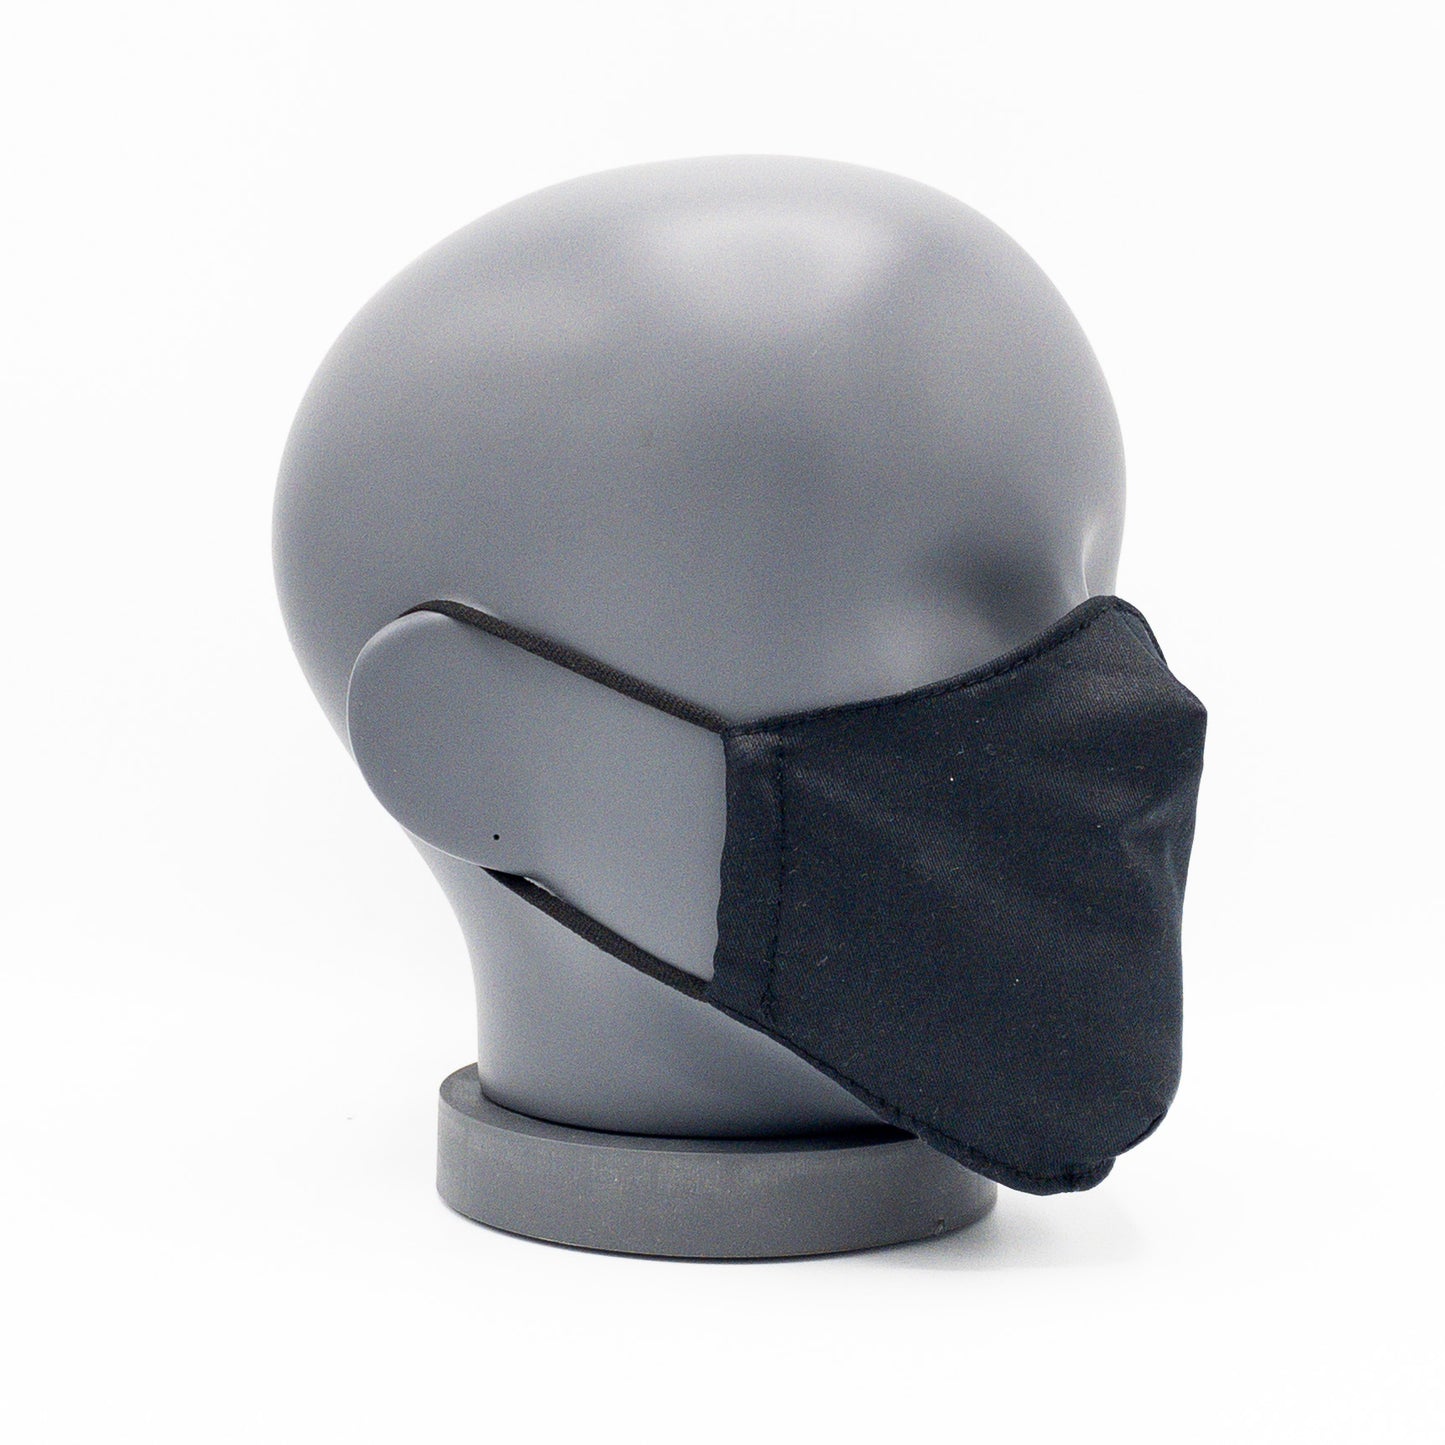 Black cotton mask